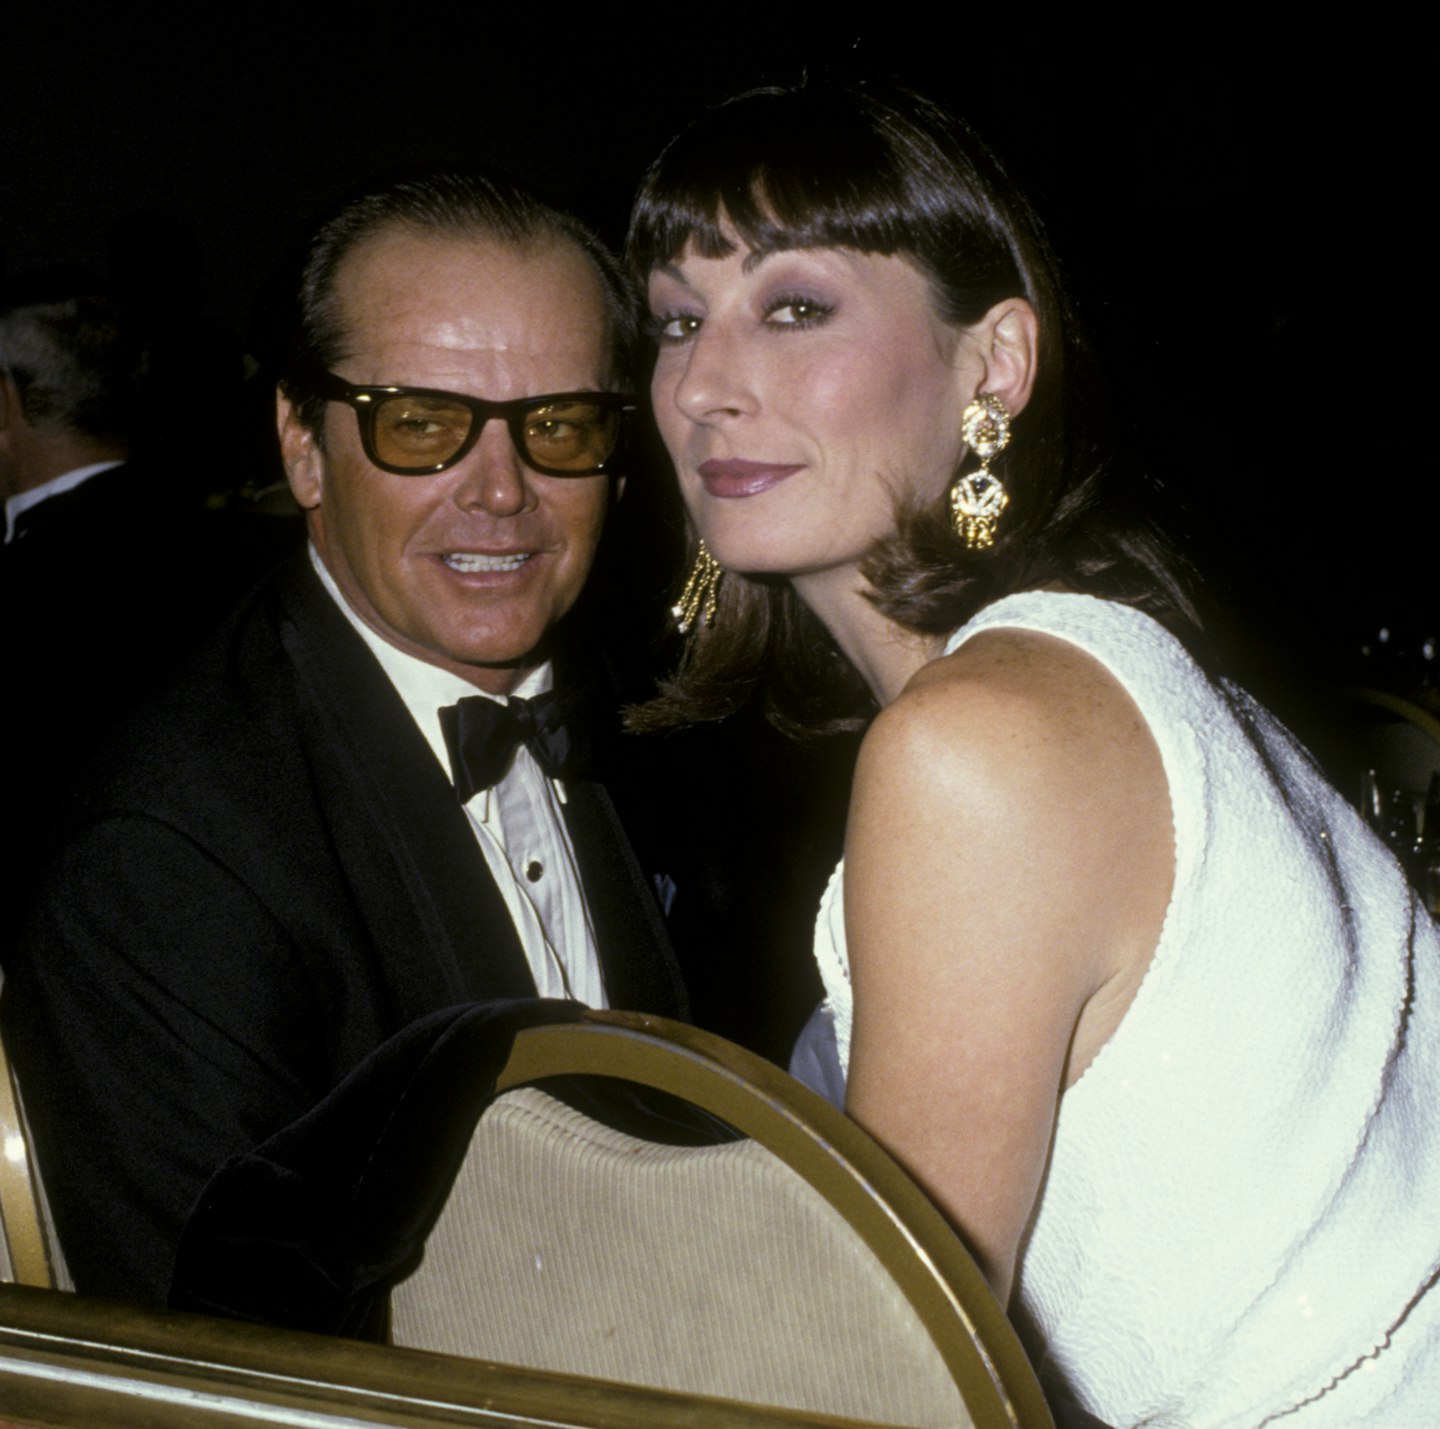 1974 – Jack Nicholson and Anjelica Huston